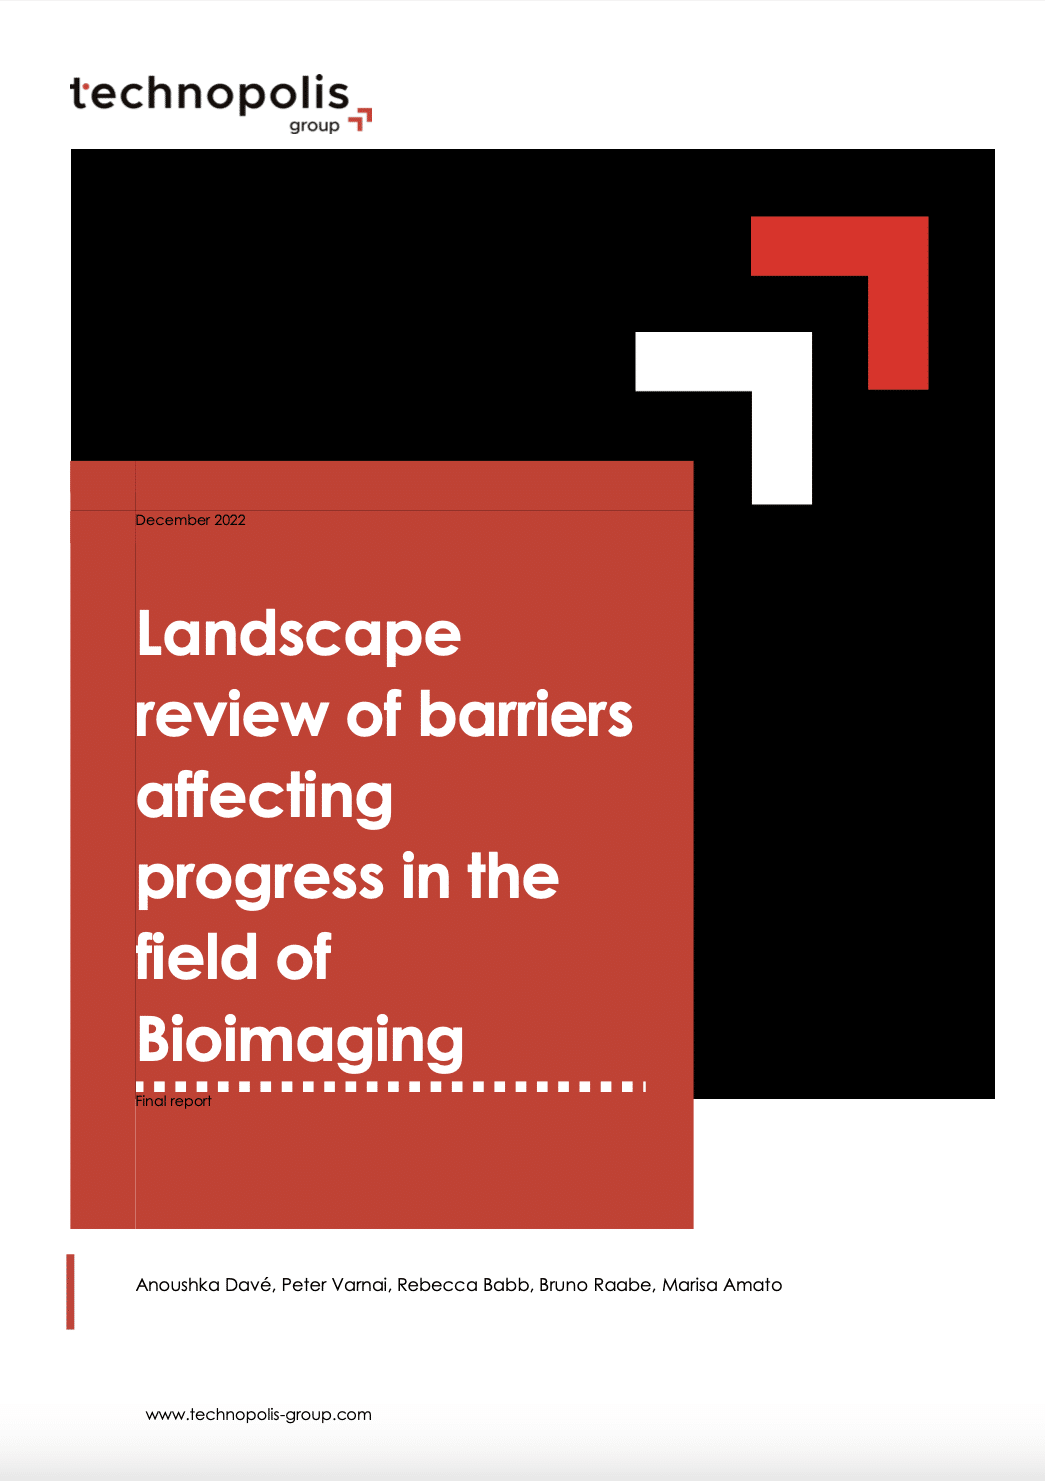 Landscape Review of Barriers Affecting Progress in Bioimaging